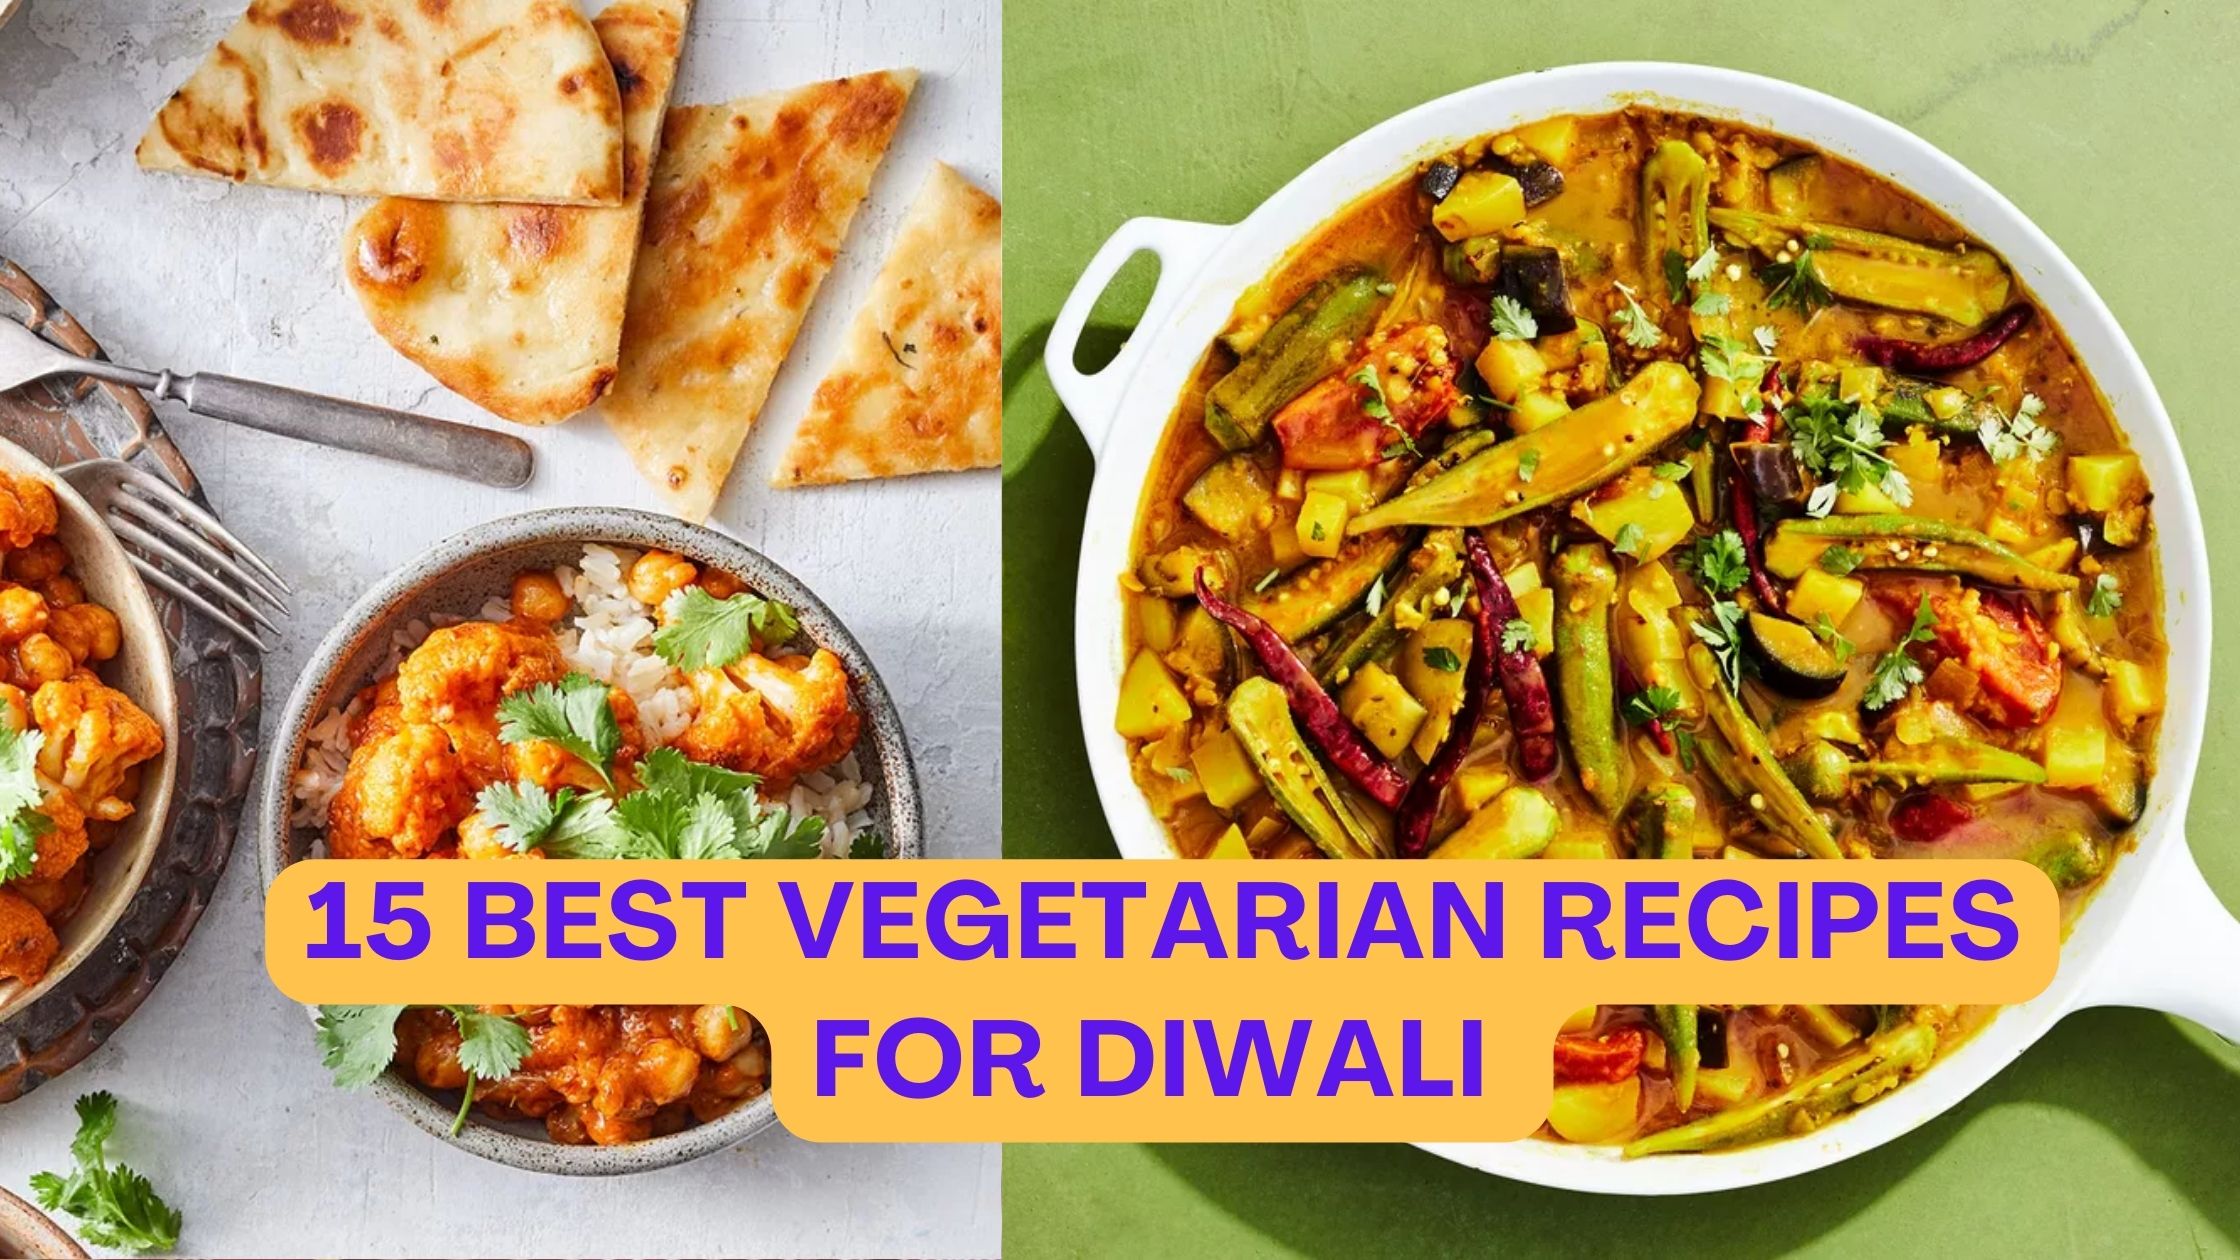 Top Vegetarian Dishes for Diwali - Vegan Recipes, Veg Recipes